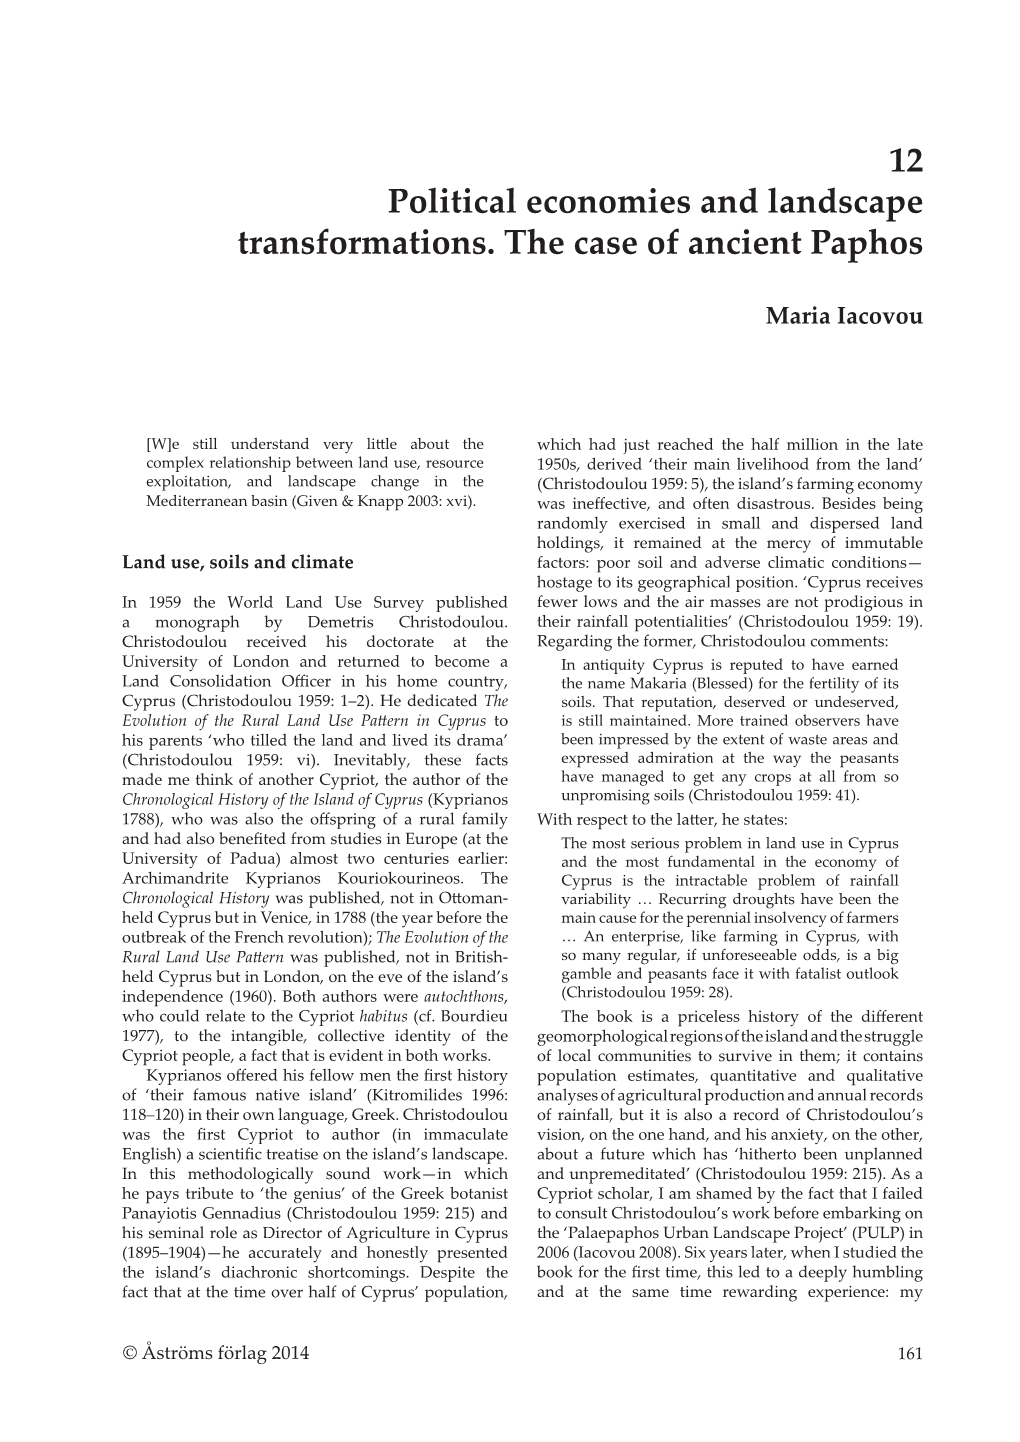 (2014), "Political Economies and Landscape Transformations. The